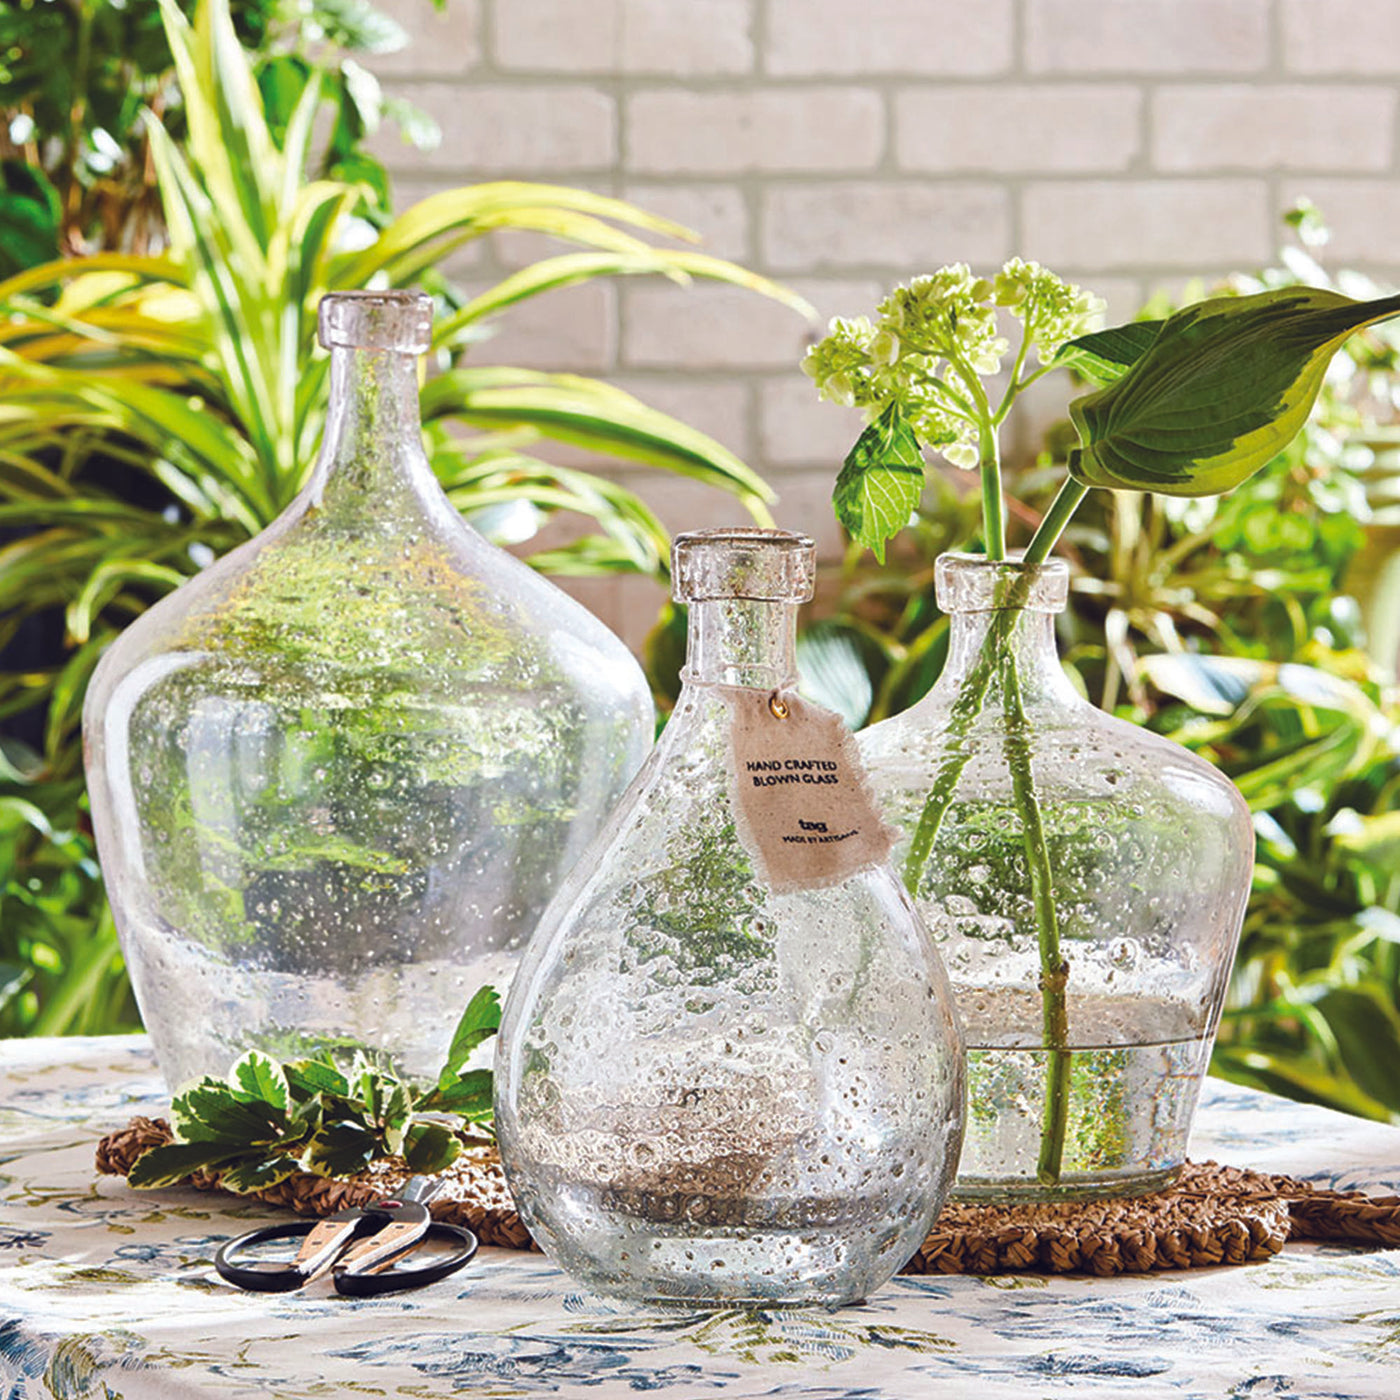 Brooklyn Pebble Glass Vase - small